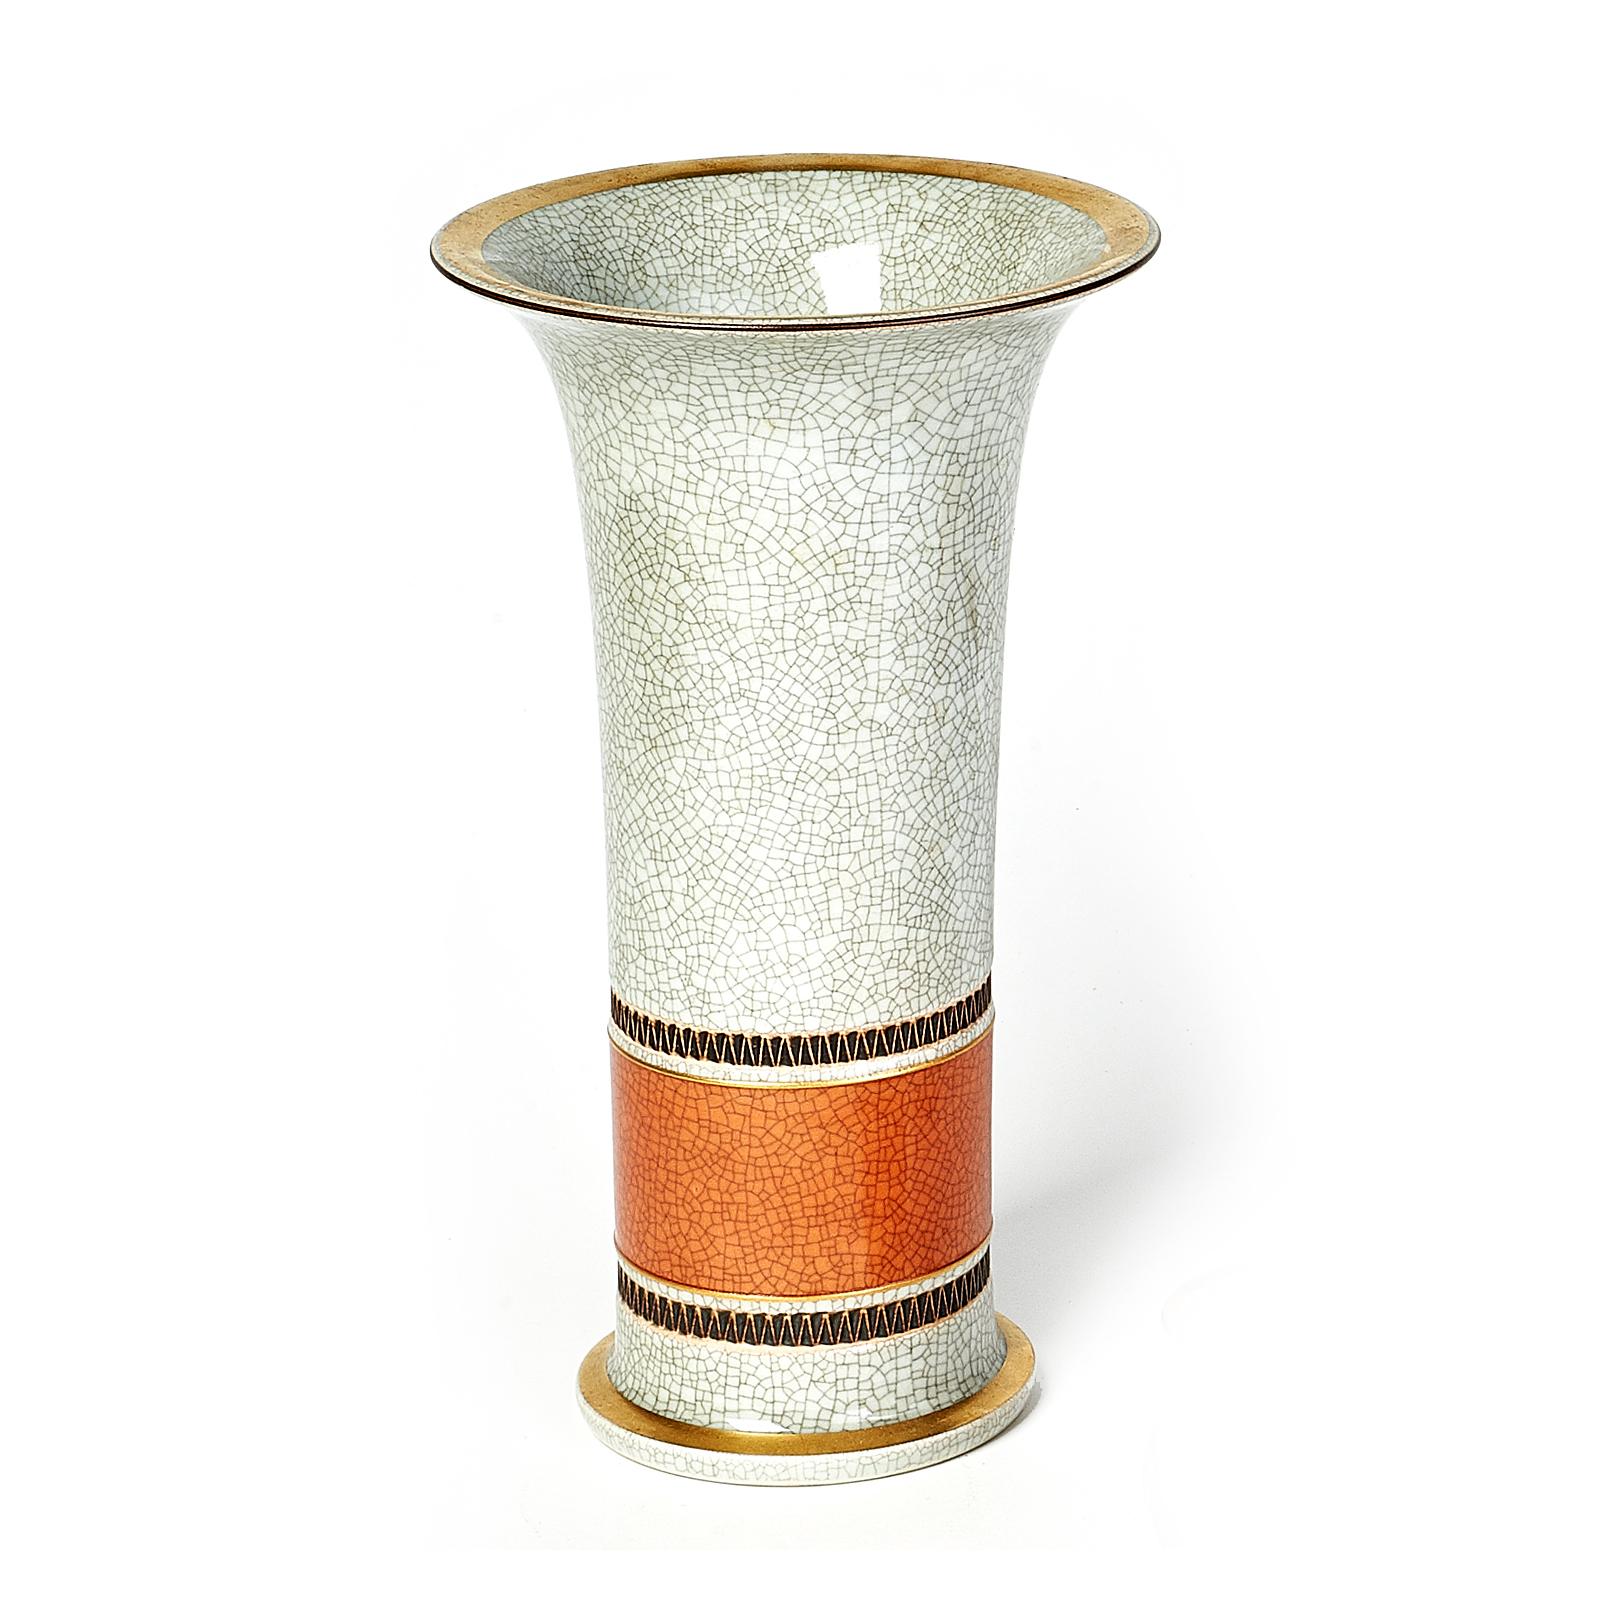 Royal Copenhagen
Trumpet shaped porcelain vase, terracotta and grey crackle glaze with gold decorative trim.
Marks on base. Denmark, 1950s
Dimensions: 9.5 height x 5.5 diameter.
   

 
    